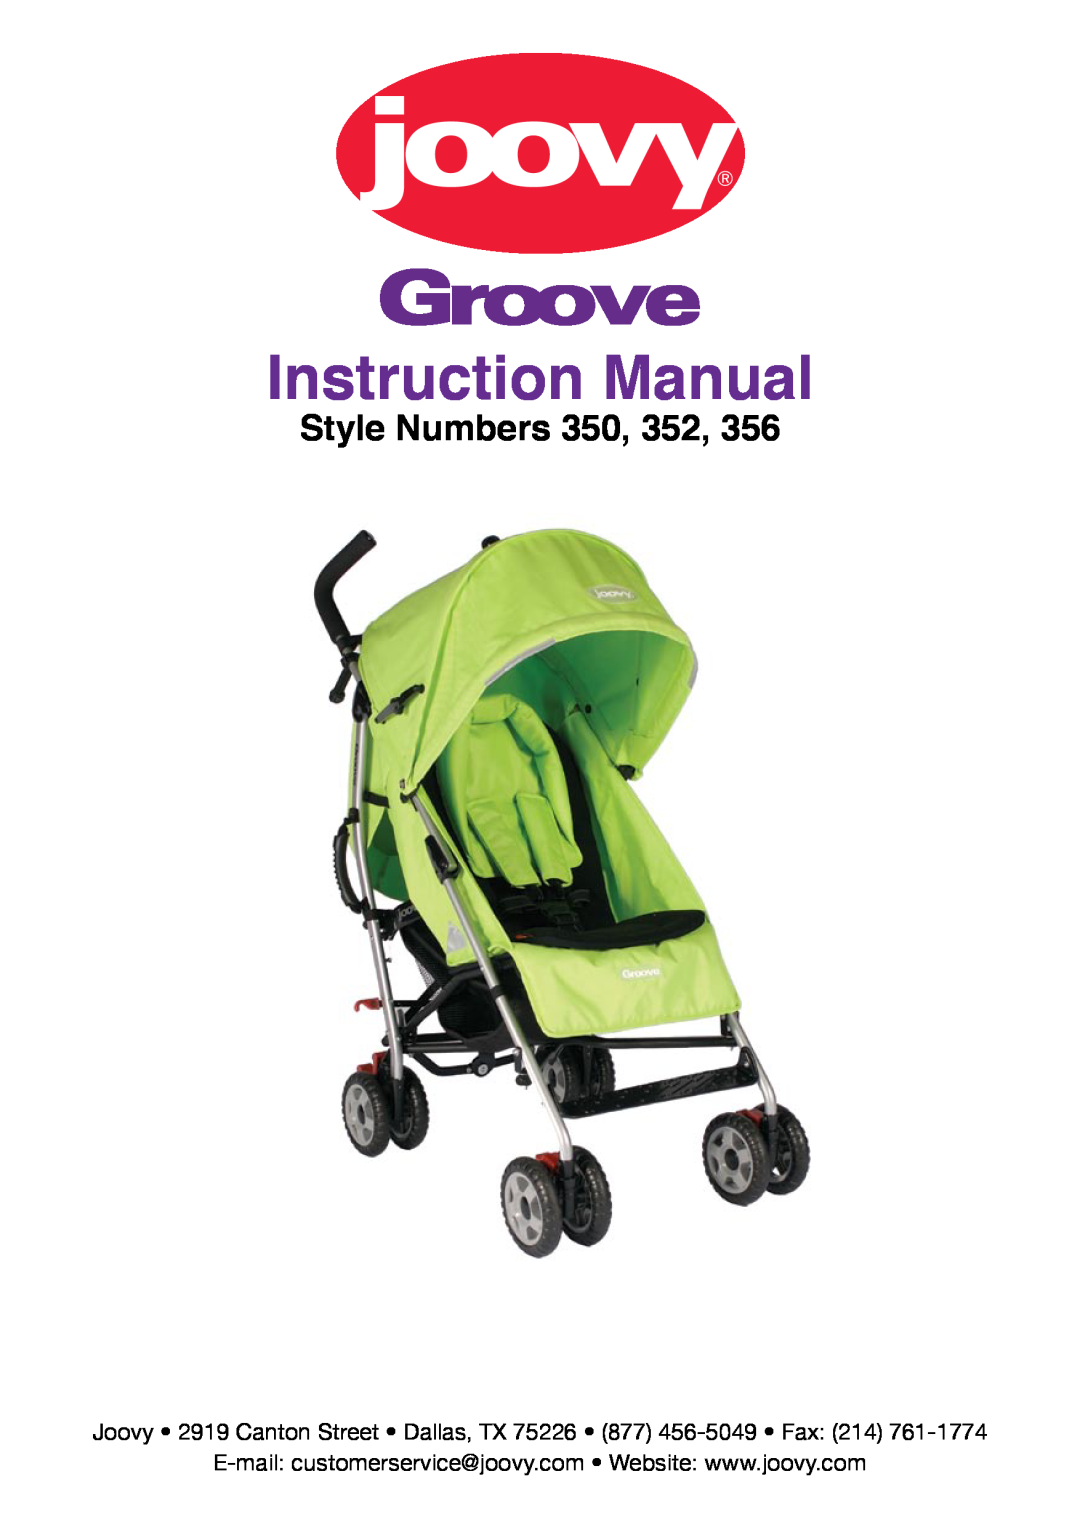 Joovy Groove Stroller, 356 manual Style Numbers 350, 352 